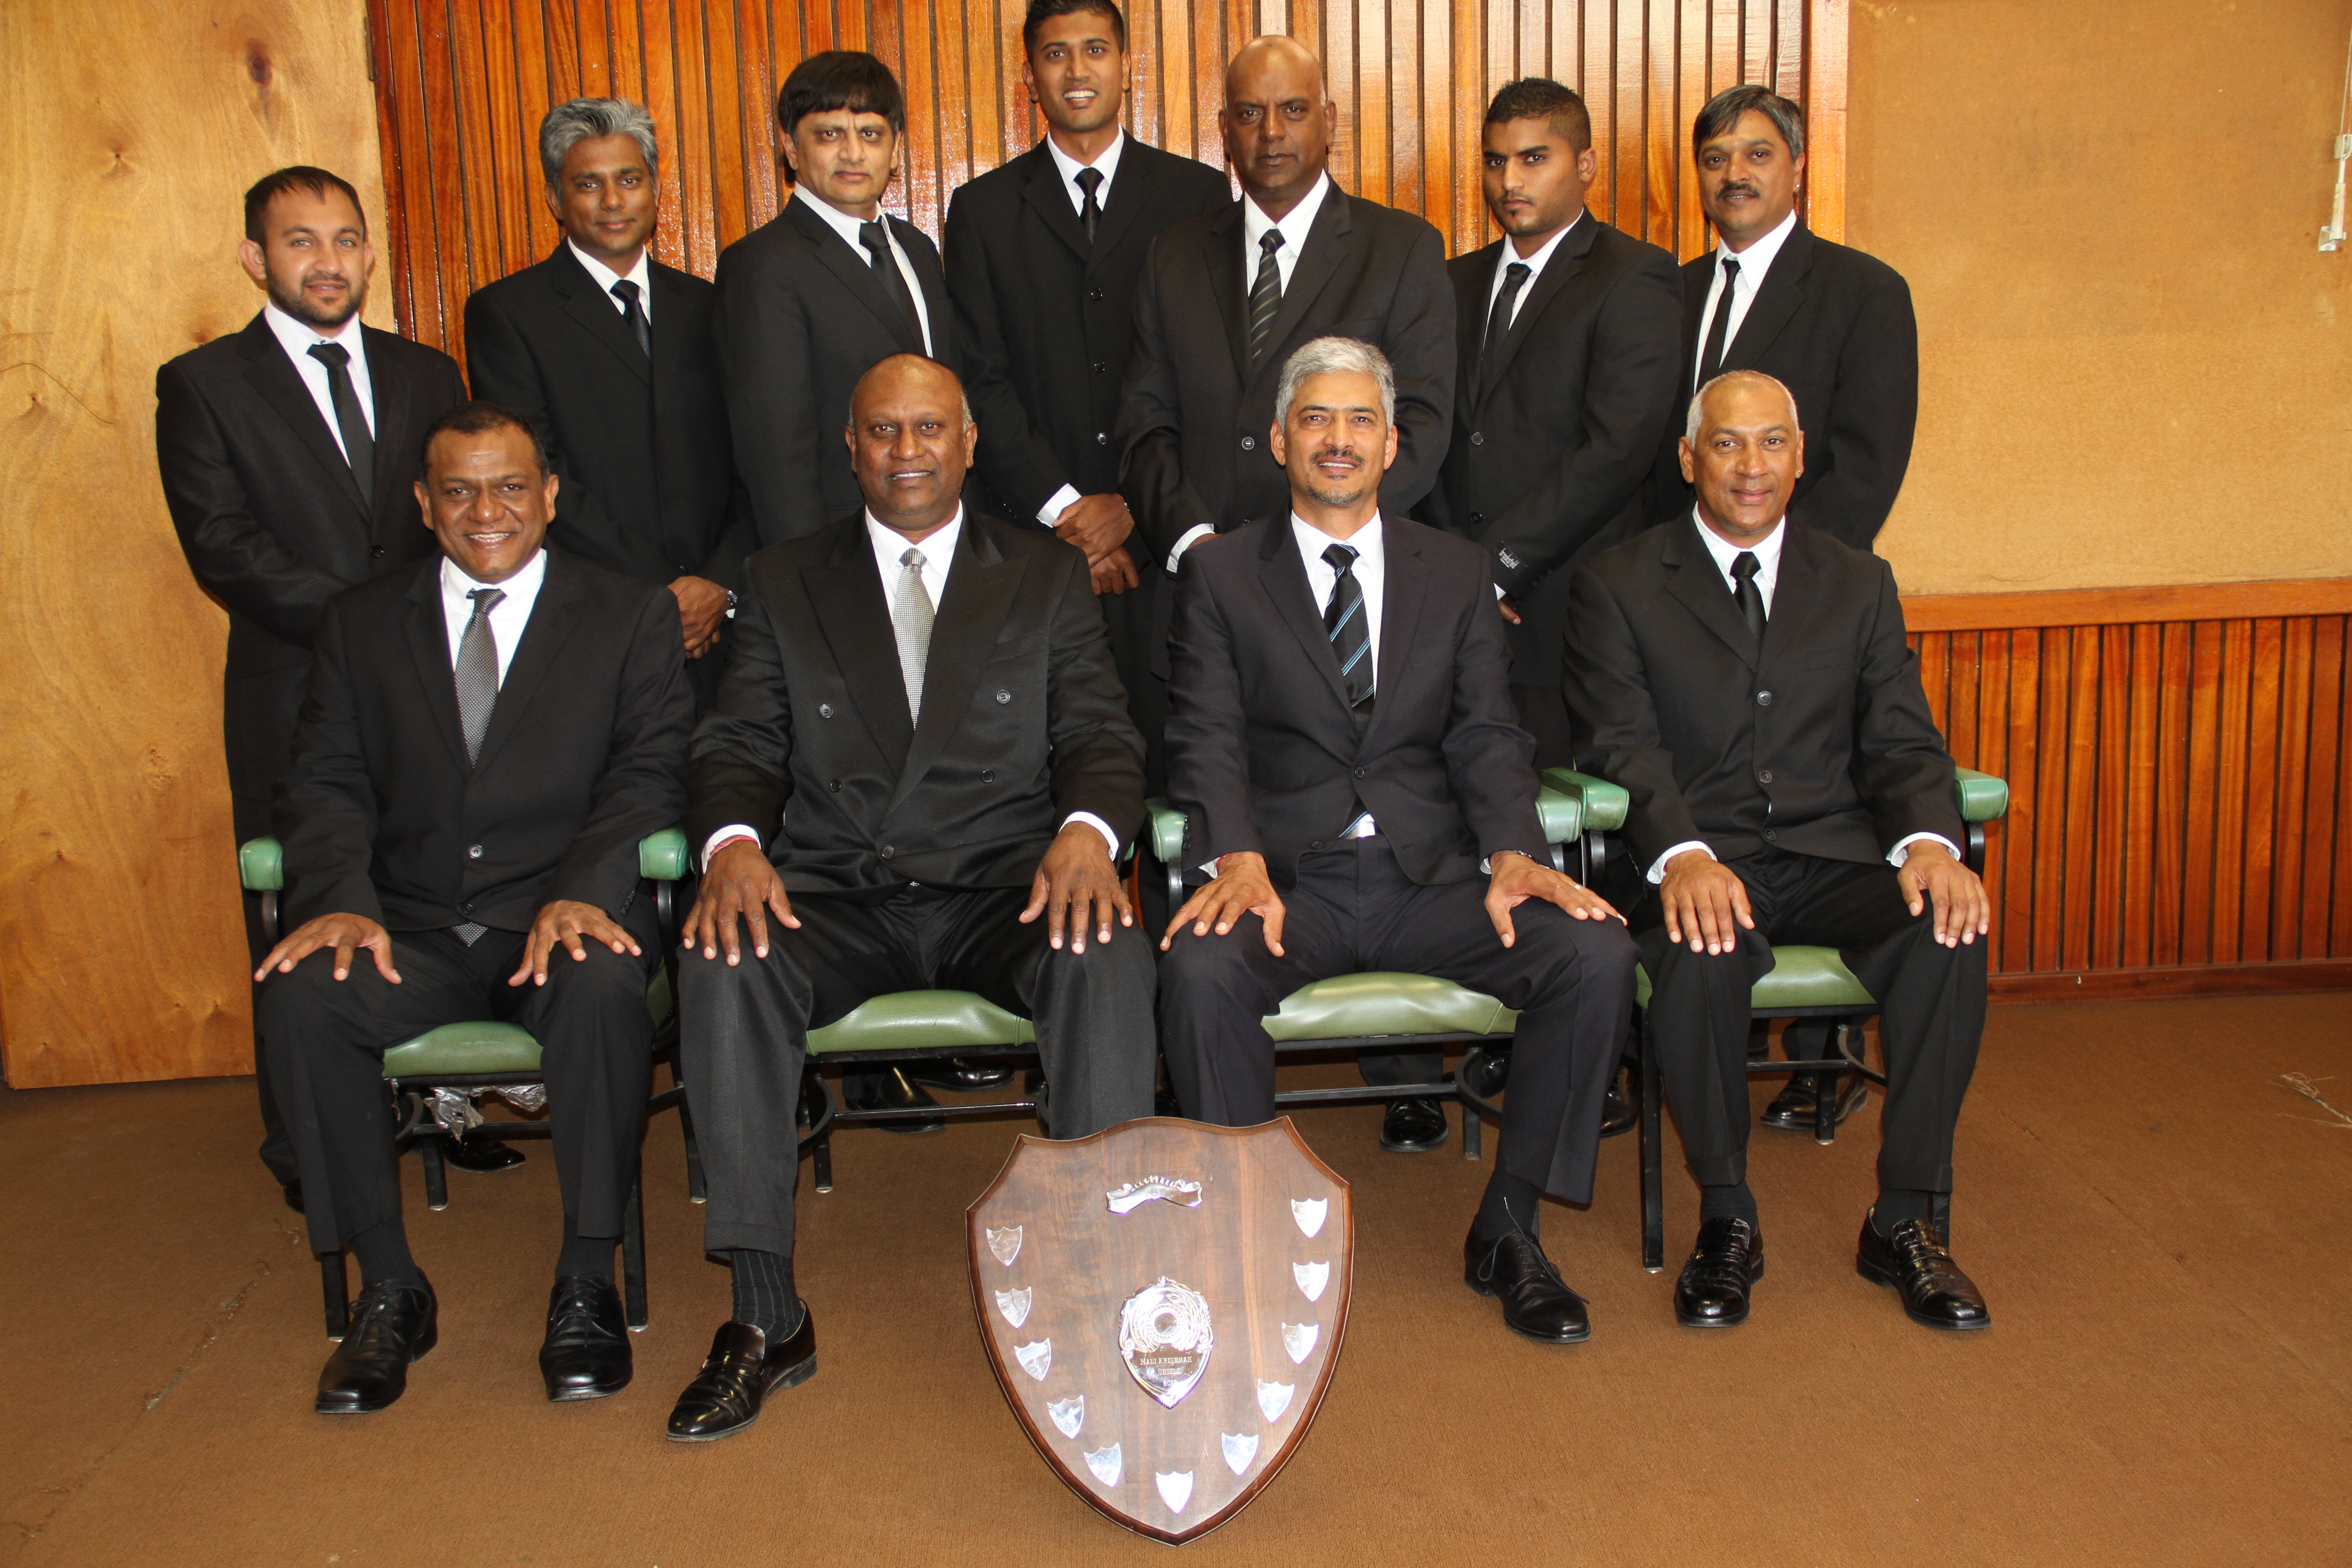 Standing:L-R. M Ali (Secretariat), S Harri (Secretariat), A Kanjee (Senior Co ordinator), K Padayachee (Ass Treasurer), U Naidoo (Pro), K Pillay (Secretariat), N Patel (Junior Co ordinator)Seated: L-R. T Pillay (Vice President), T Padayachee (President), R Jivan (Treasurer), K Veramothoo (Vice President)